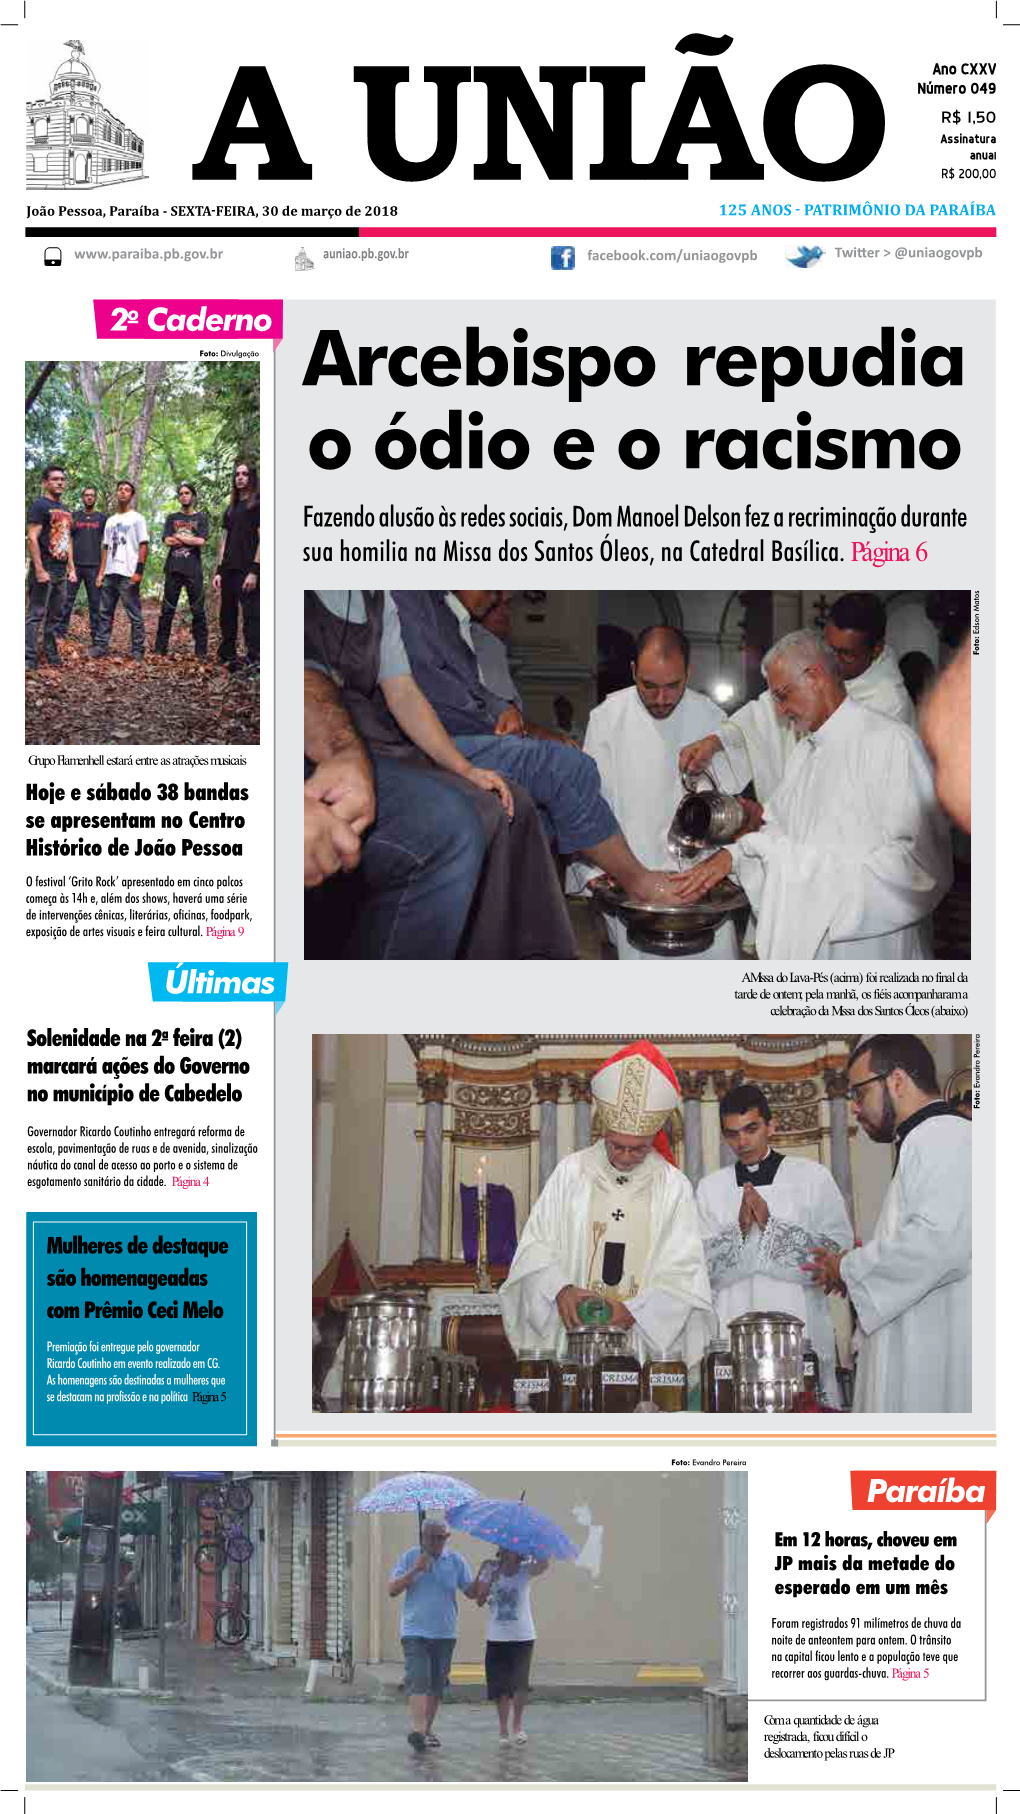 Arcebispo Repudia O Ódio E O Racismo